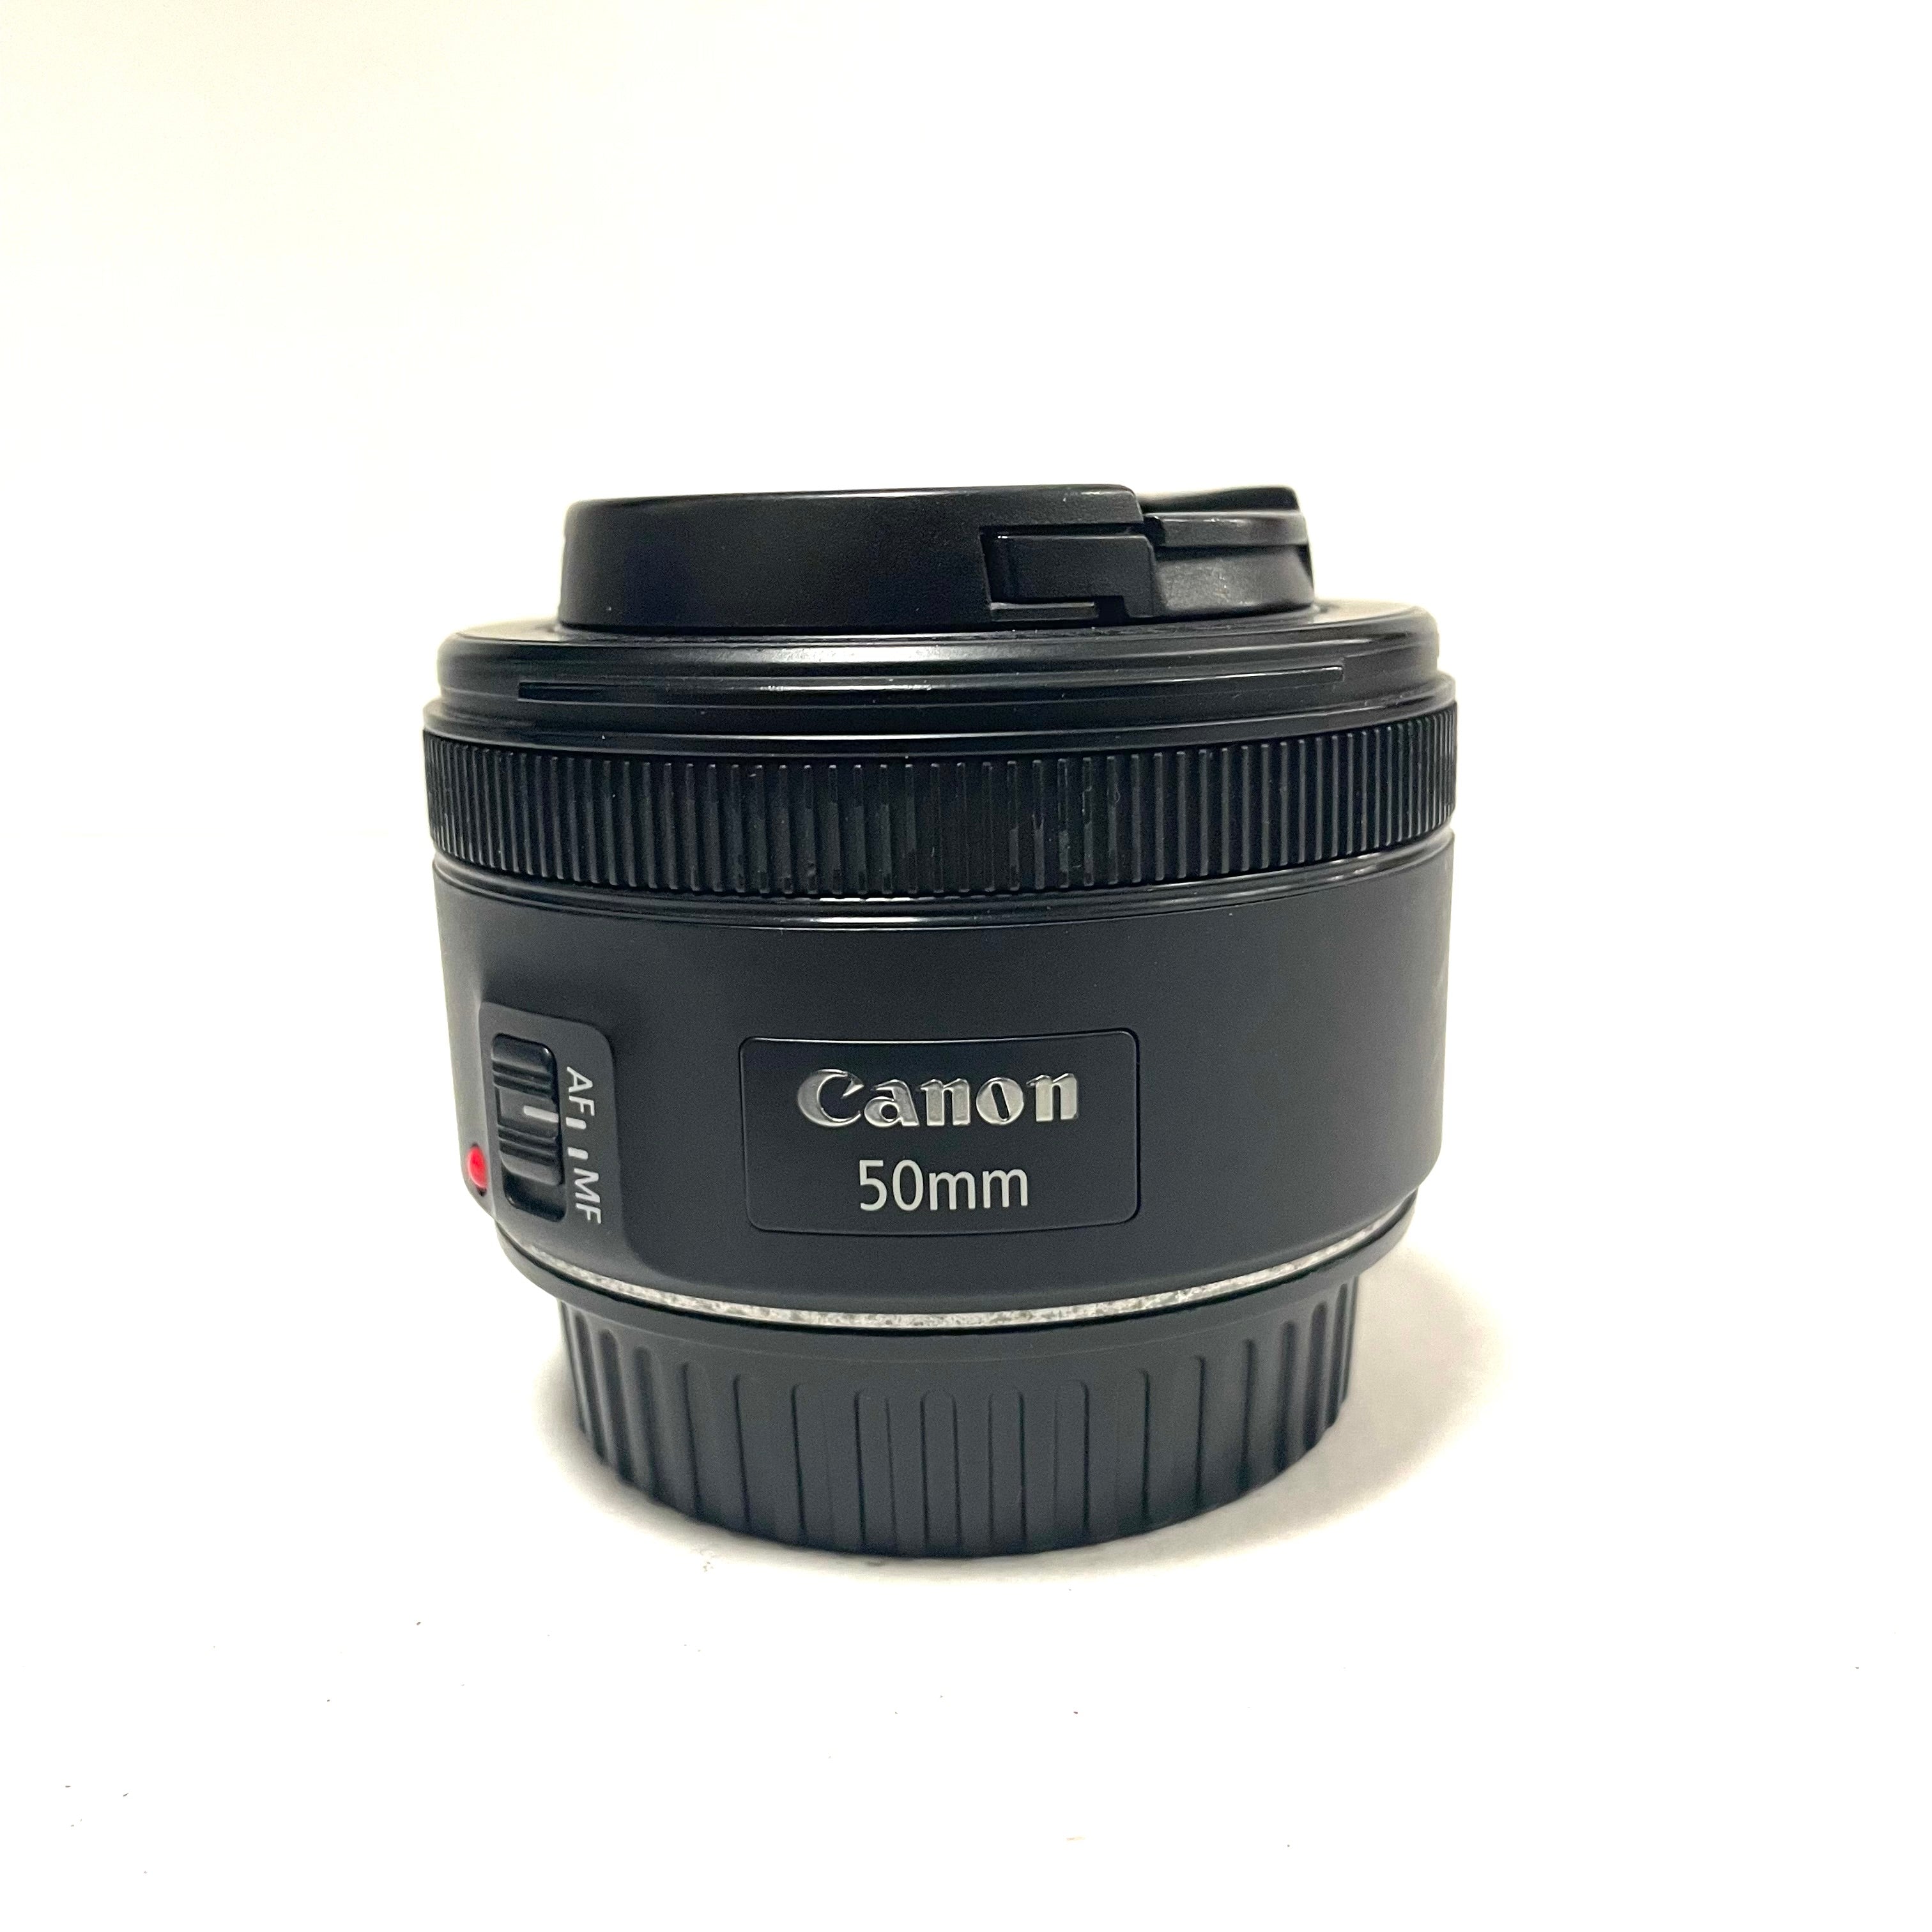 Canon Ef lens 50mm f/1.8 Stm usato